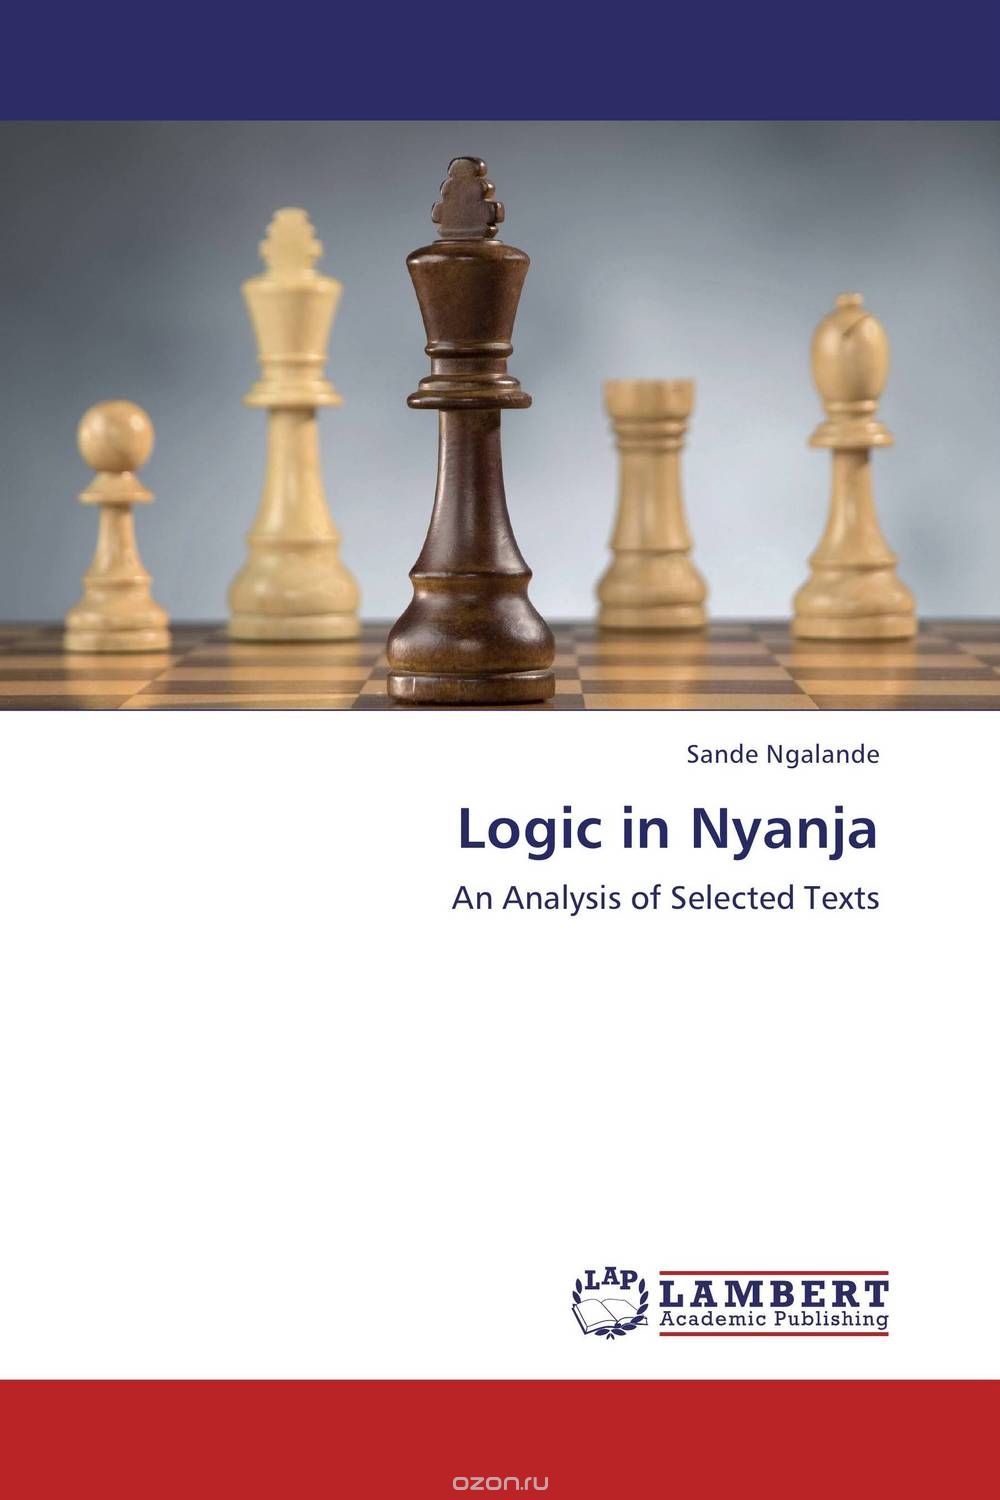 Скачать книгу "Logic in Nyanja"